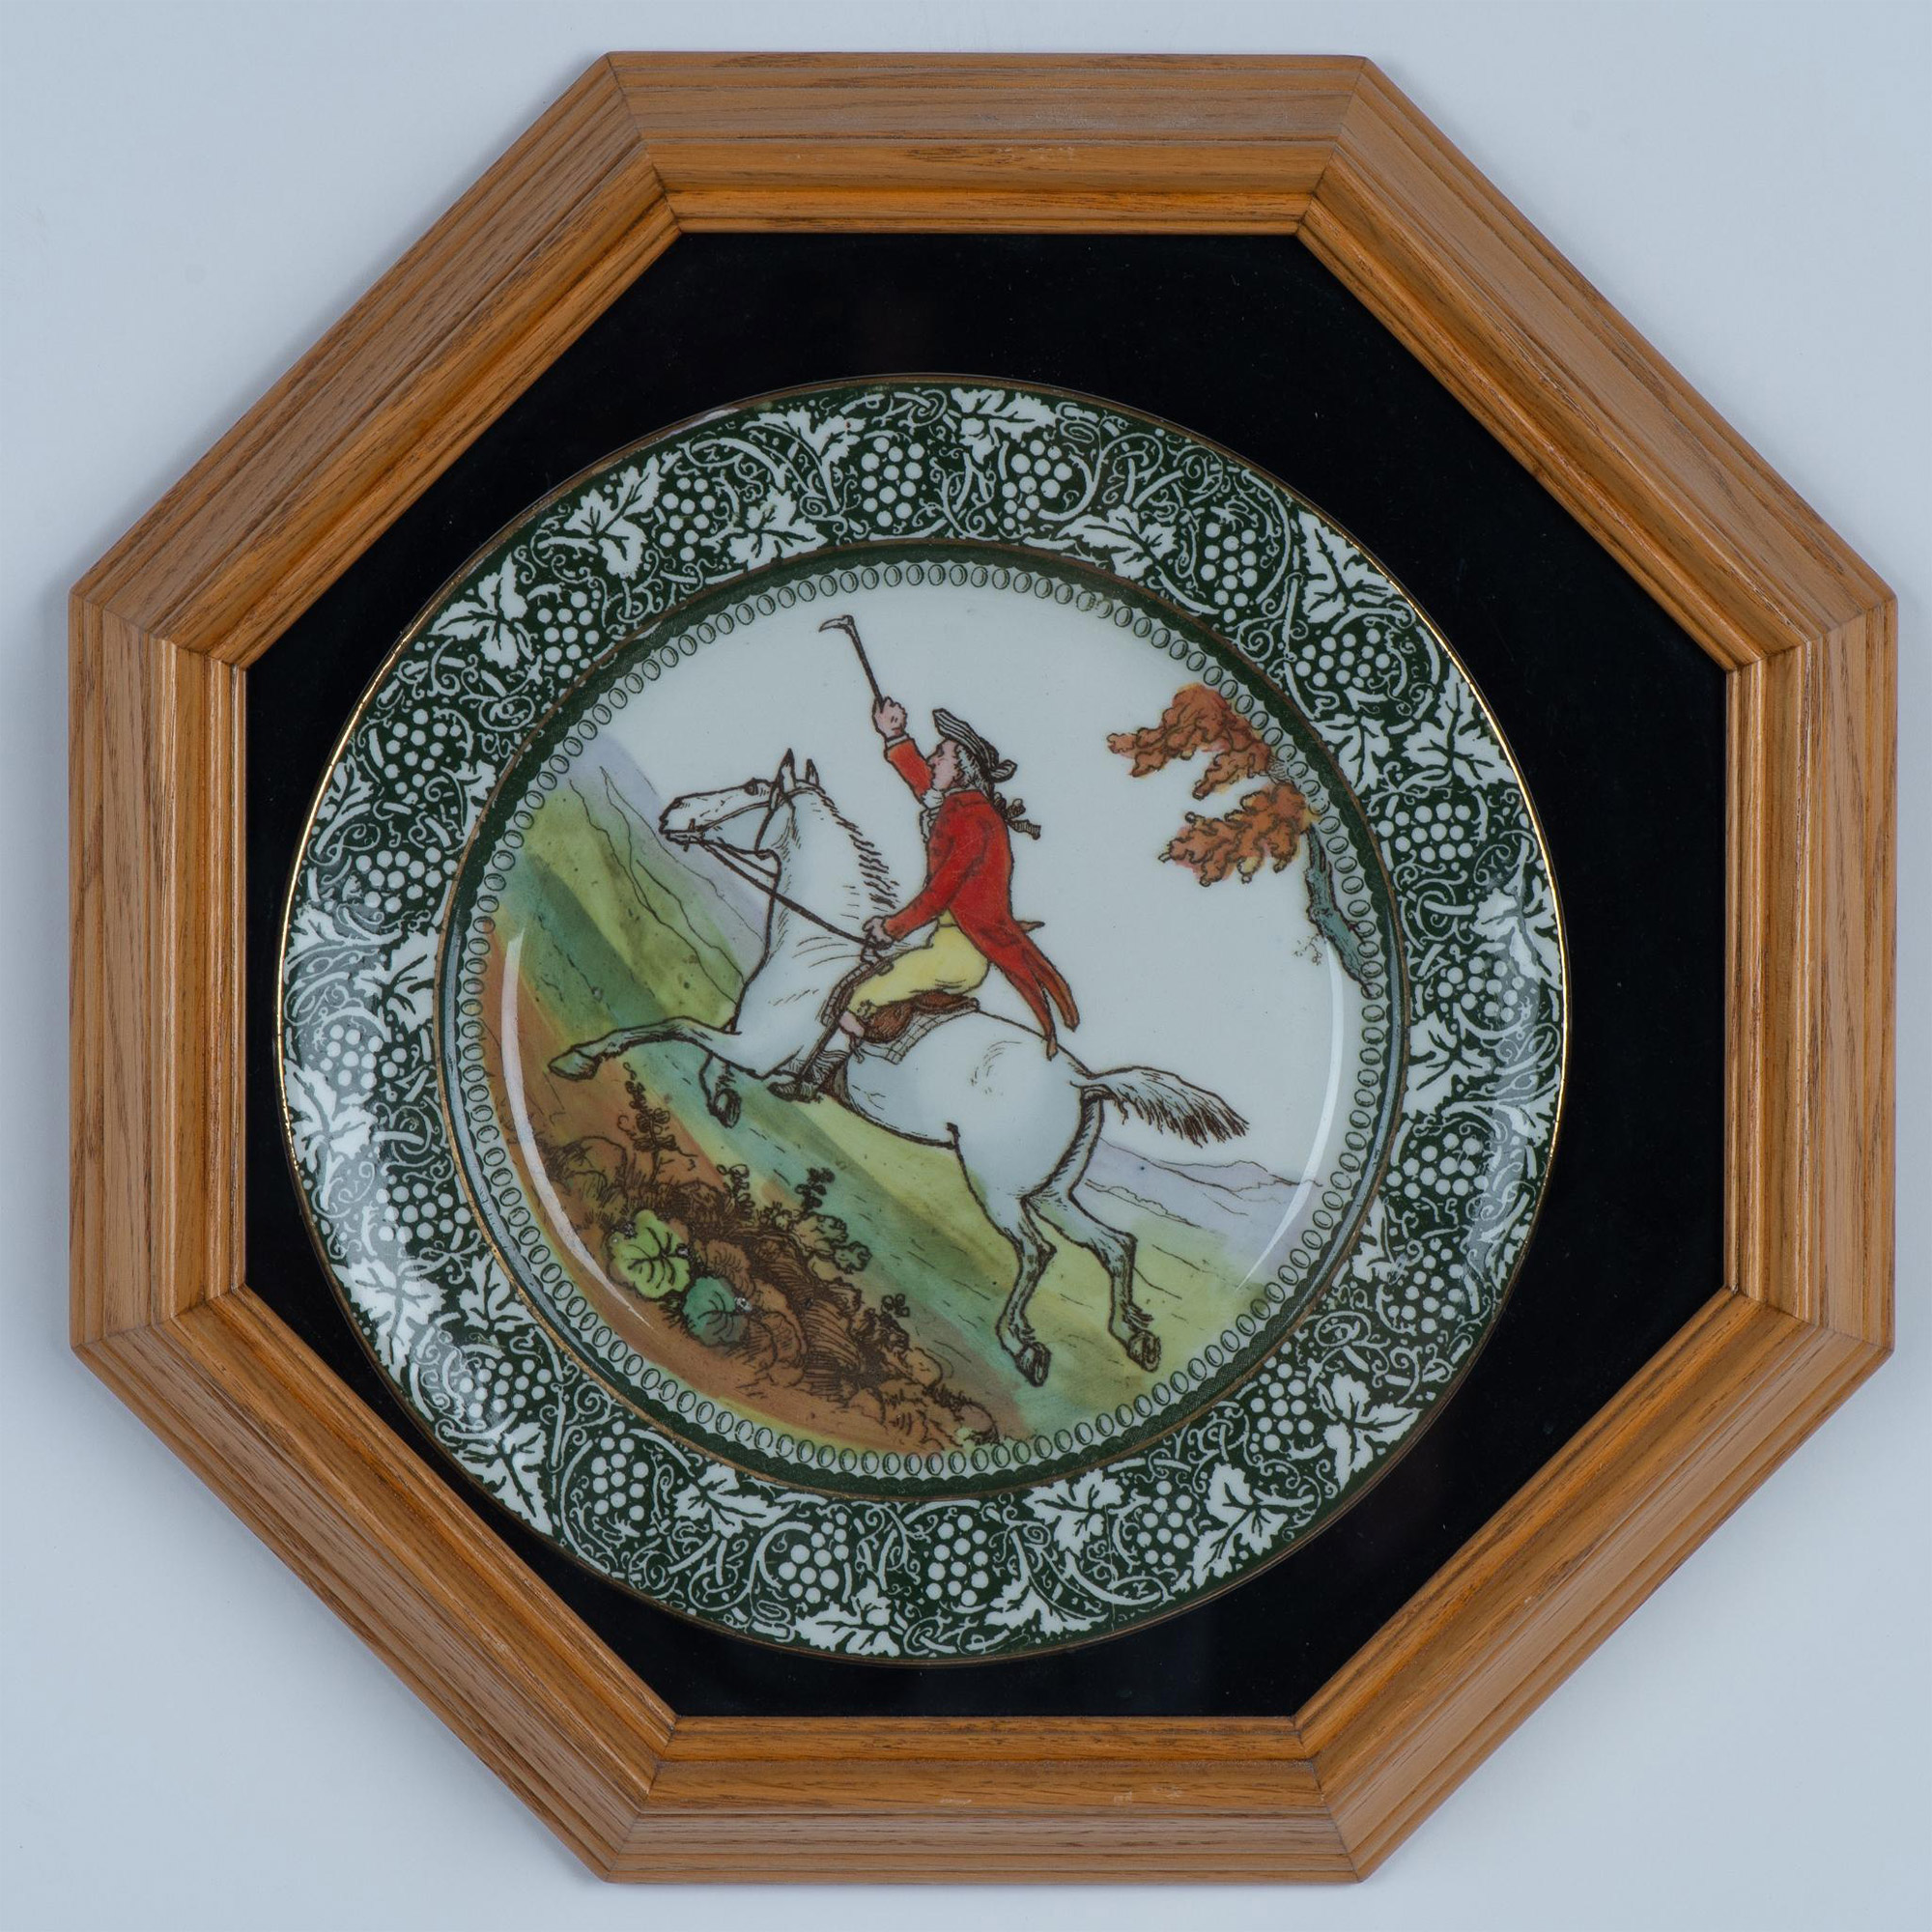 Pair of Royal Doulton Hunting Morland Seriesware Plates - Image 2 of 8